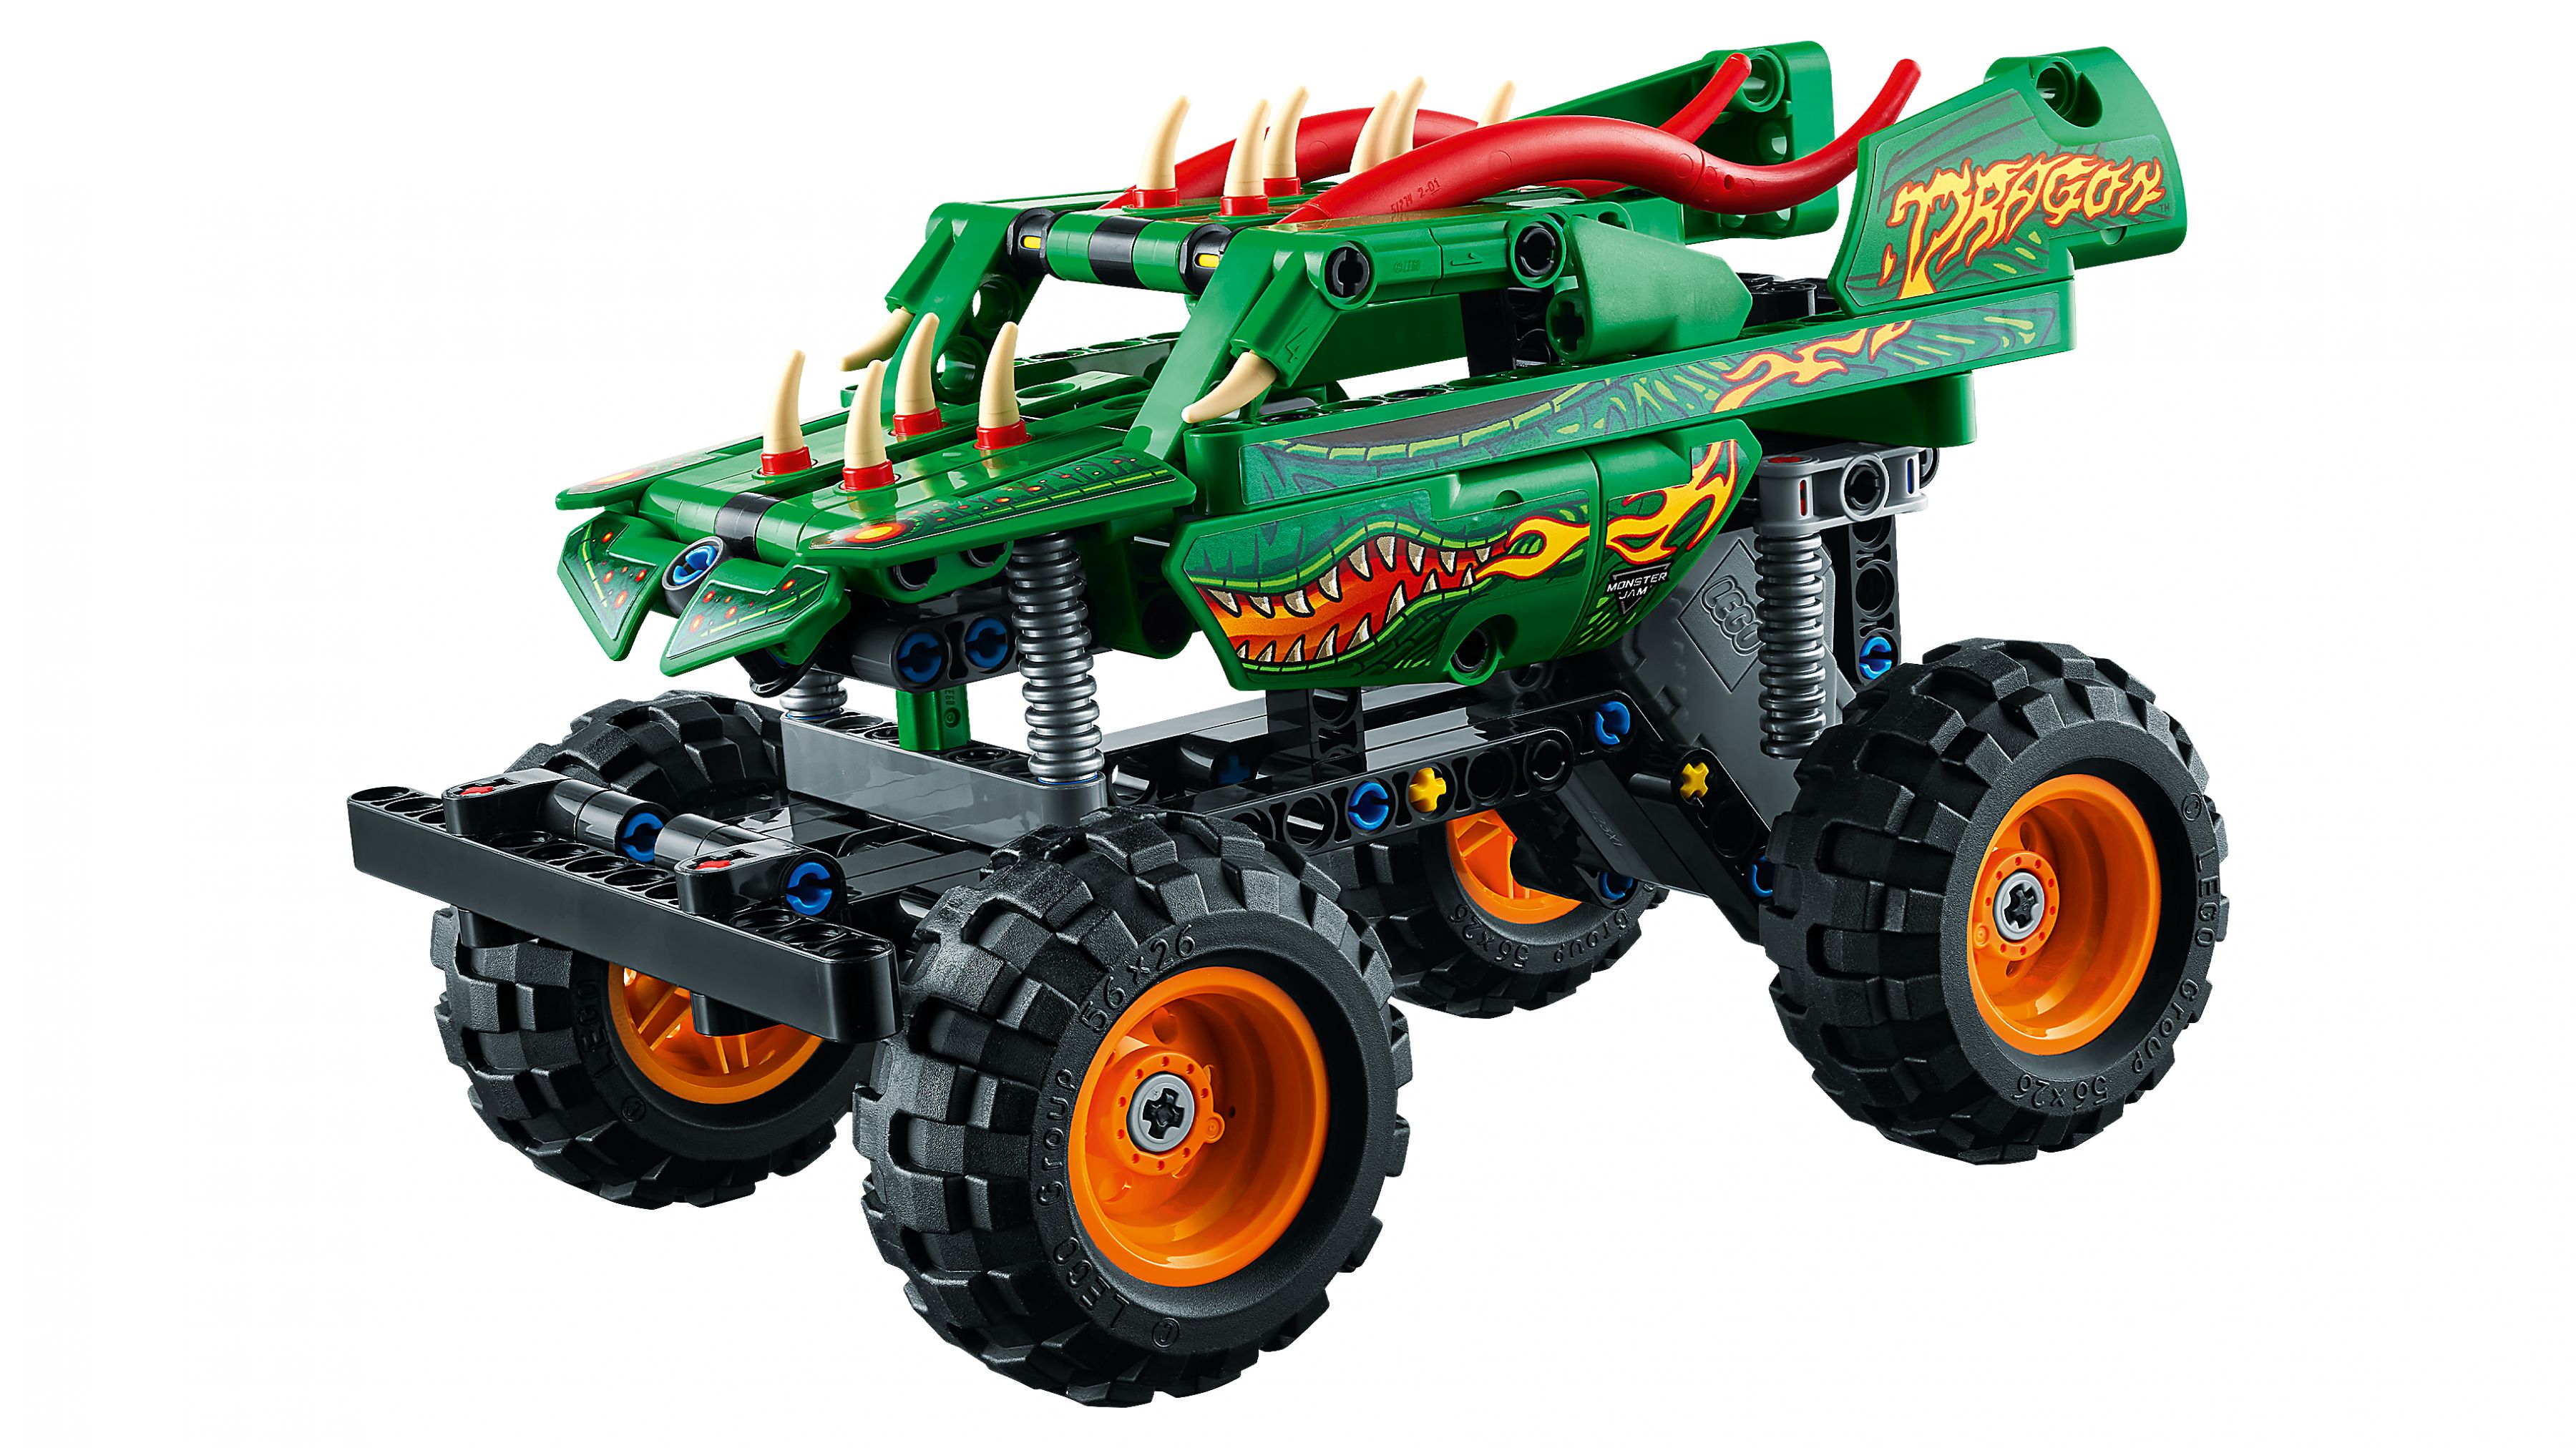 LEGO Technic 42149 Monster Jam™ Dragon™ LEGO_42149_WEB_SEC01_NOBG.jpg